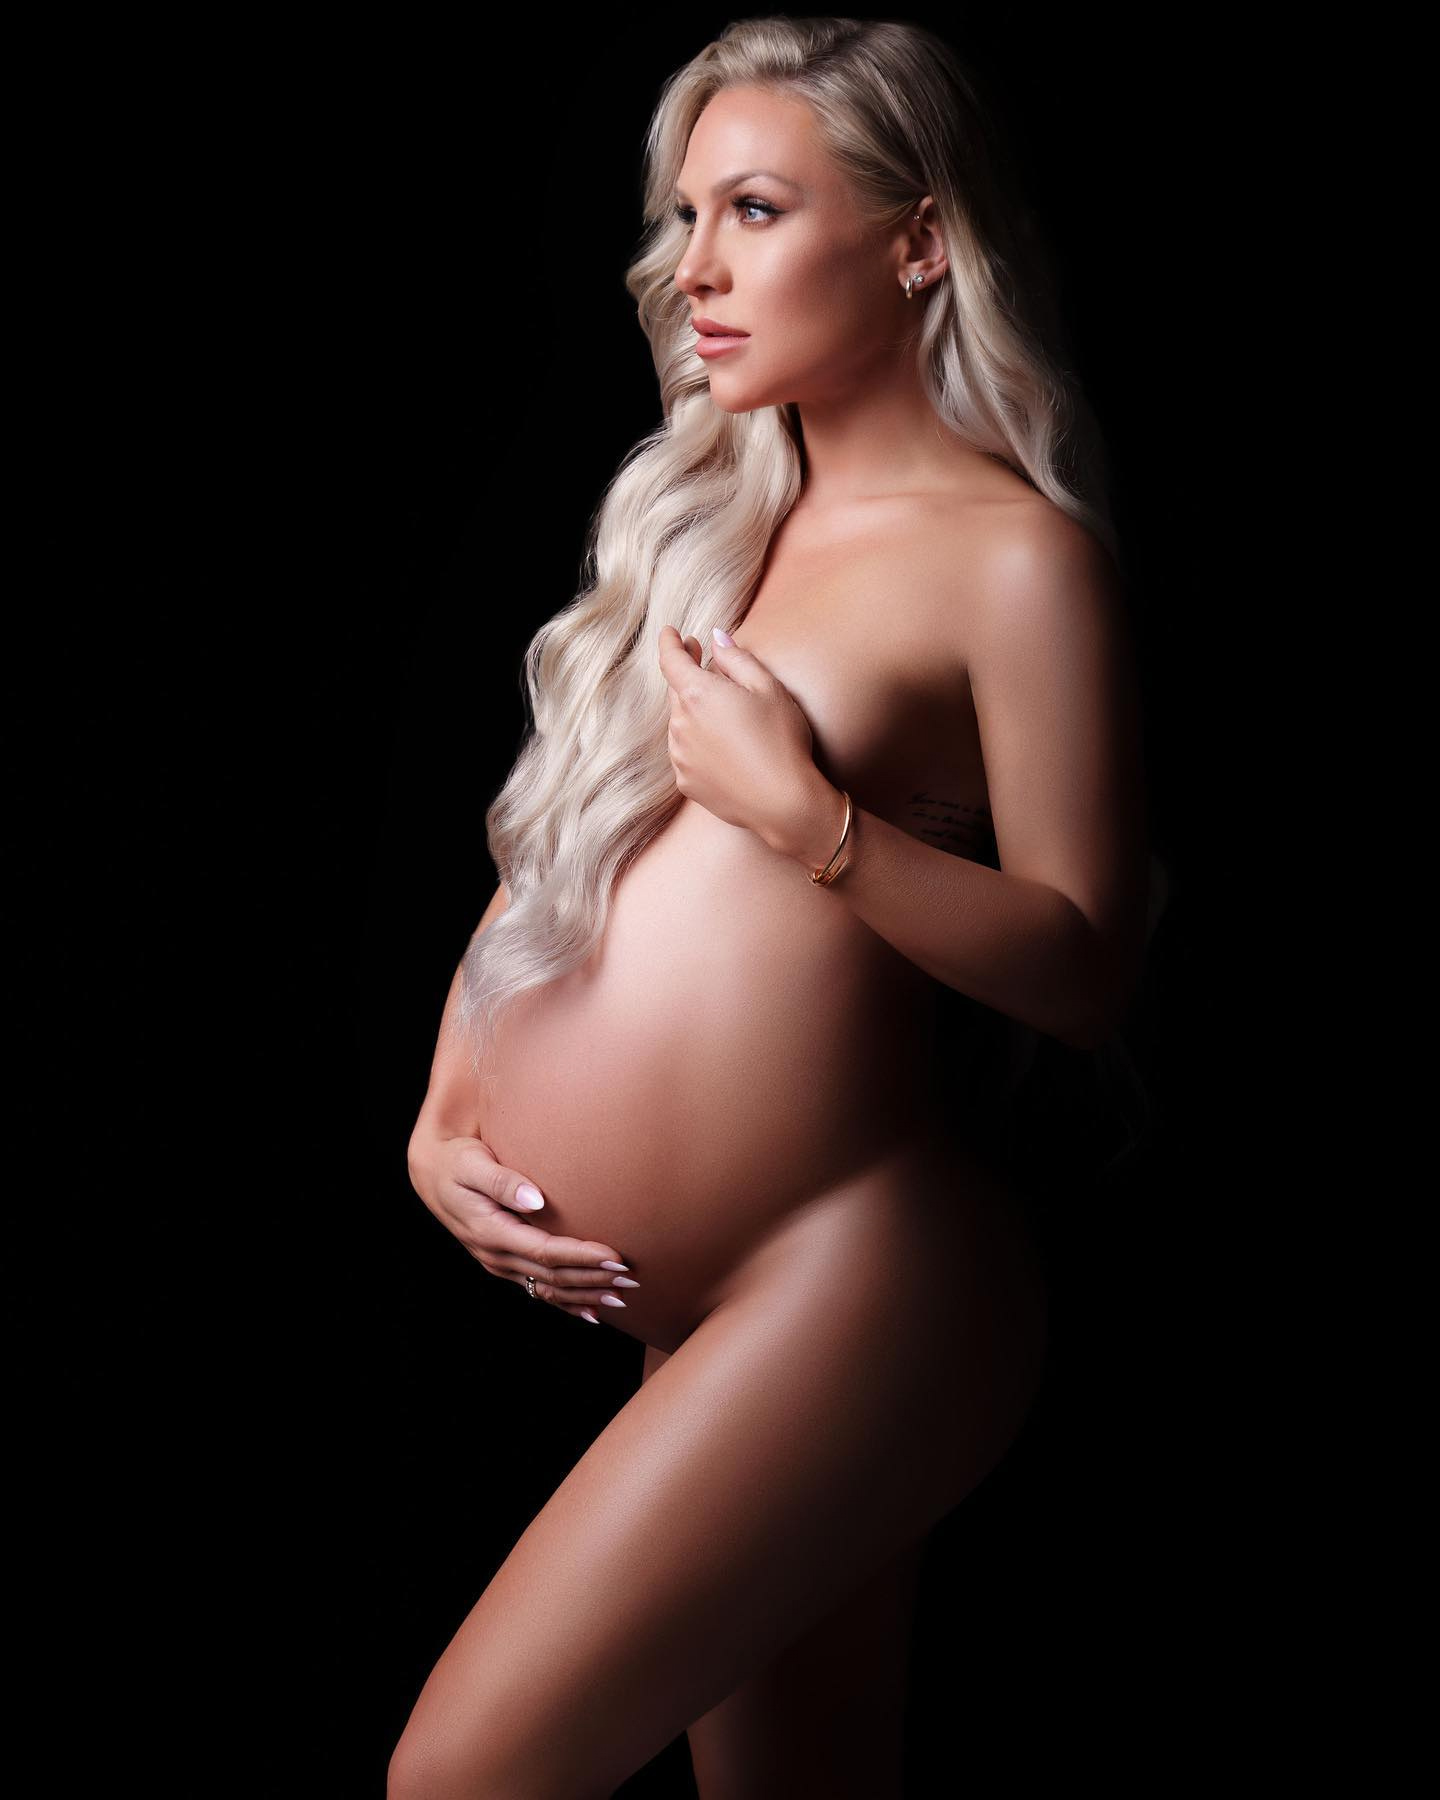 Megan Fox Pregnant Porn - Pregnant Sharna Burgess Poses Nude Ahead of Due Date: Photo